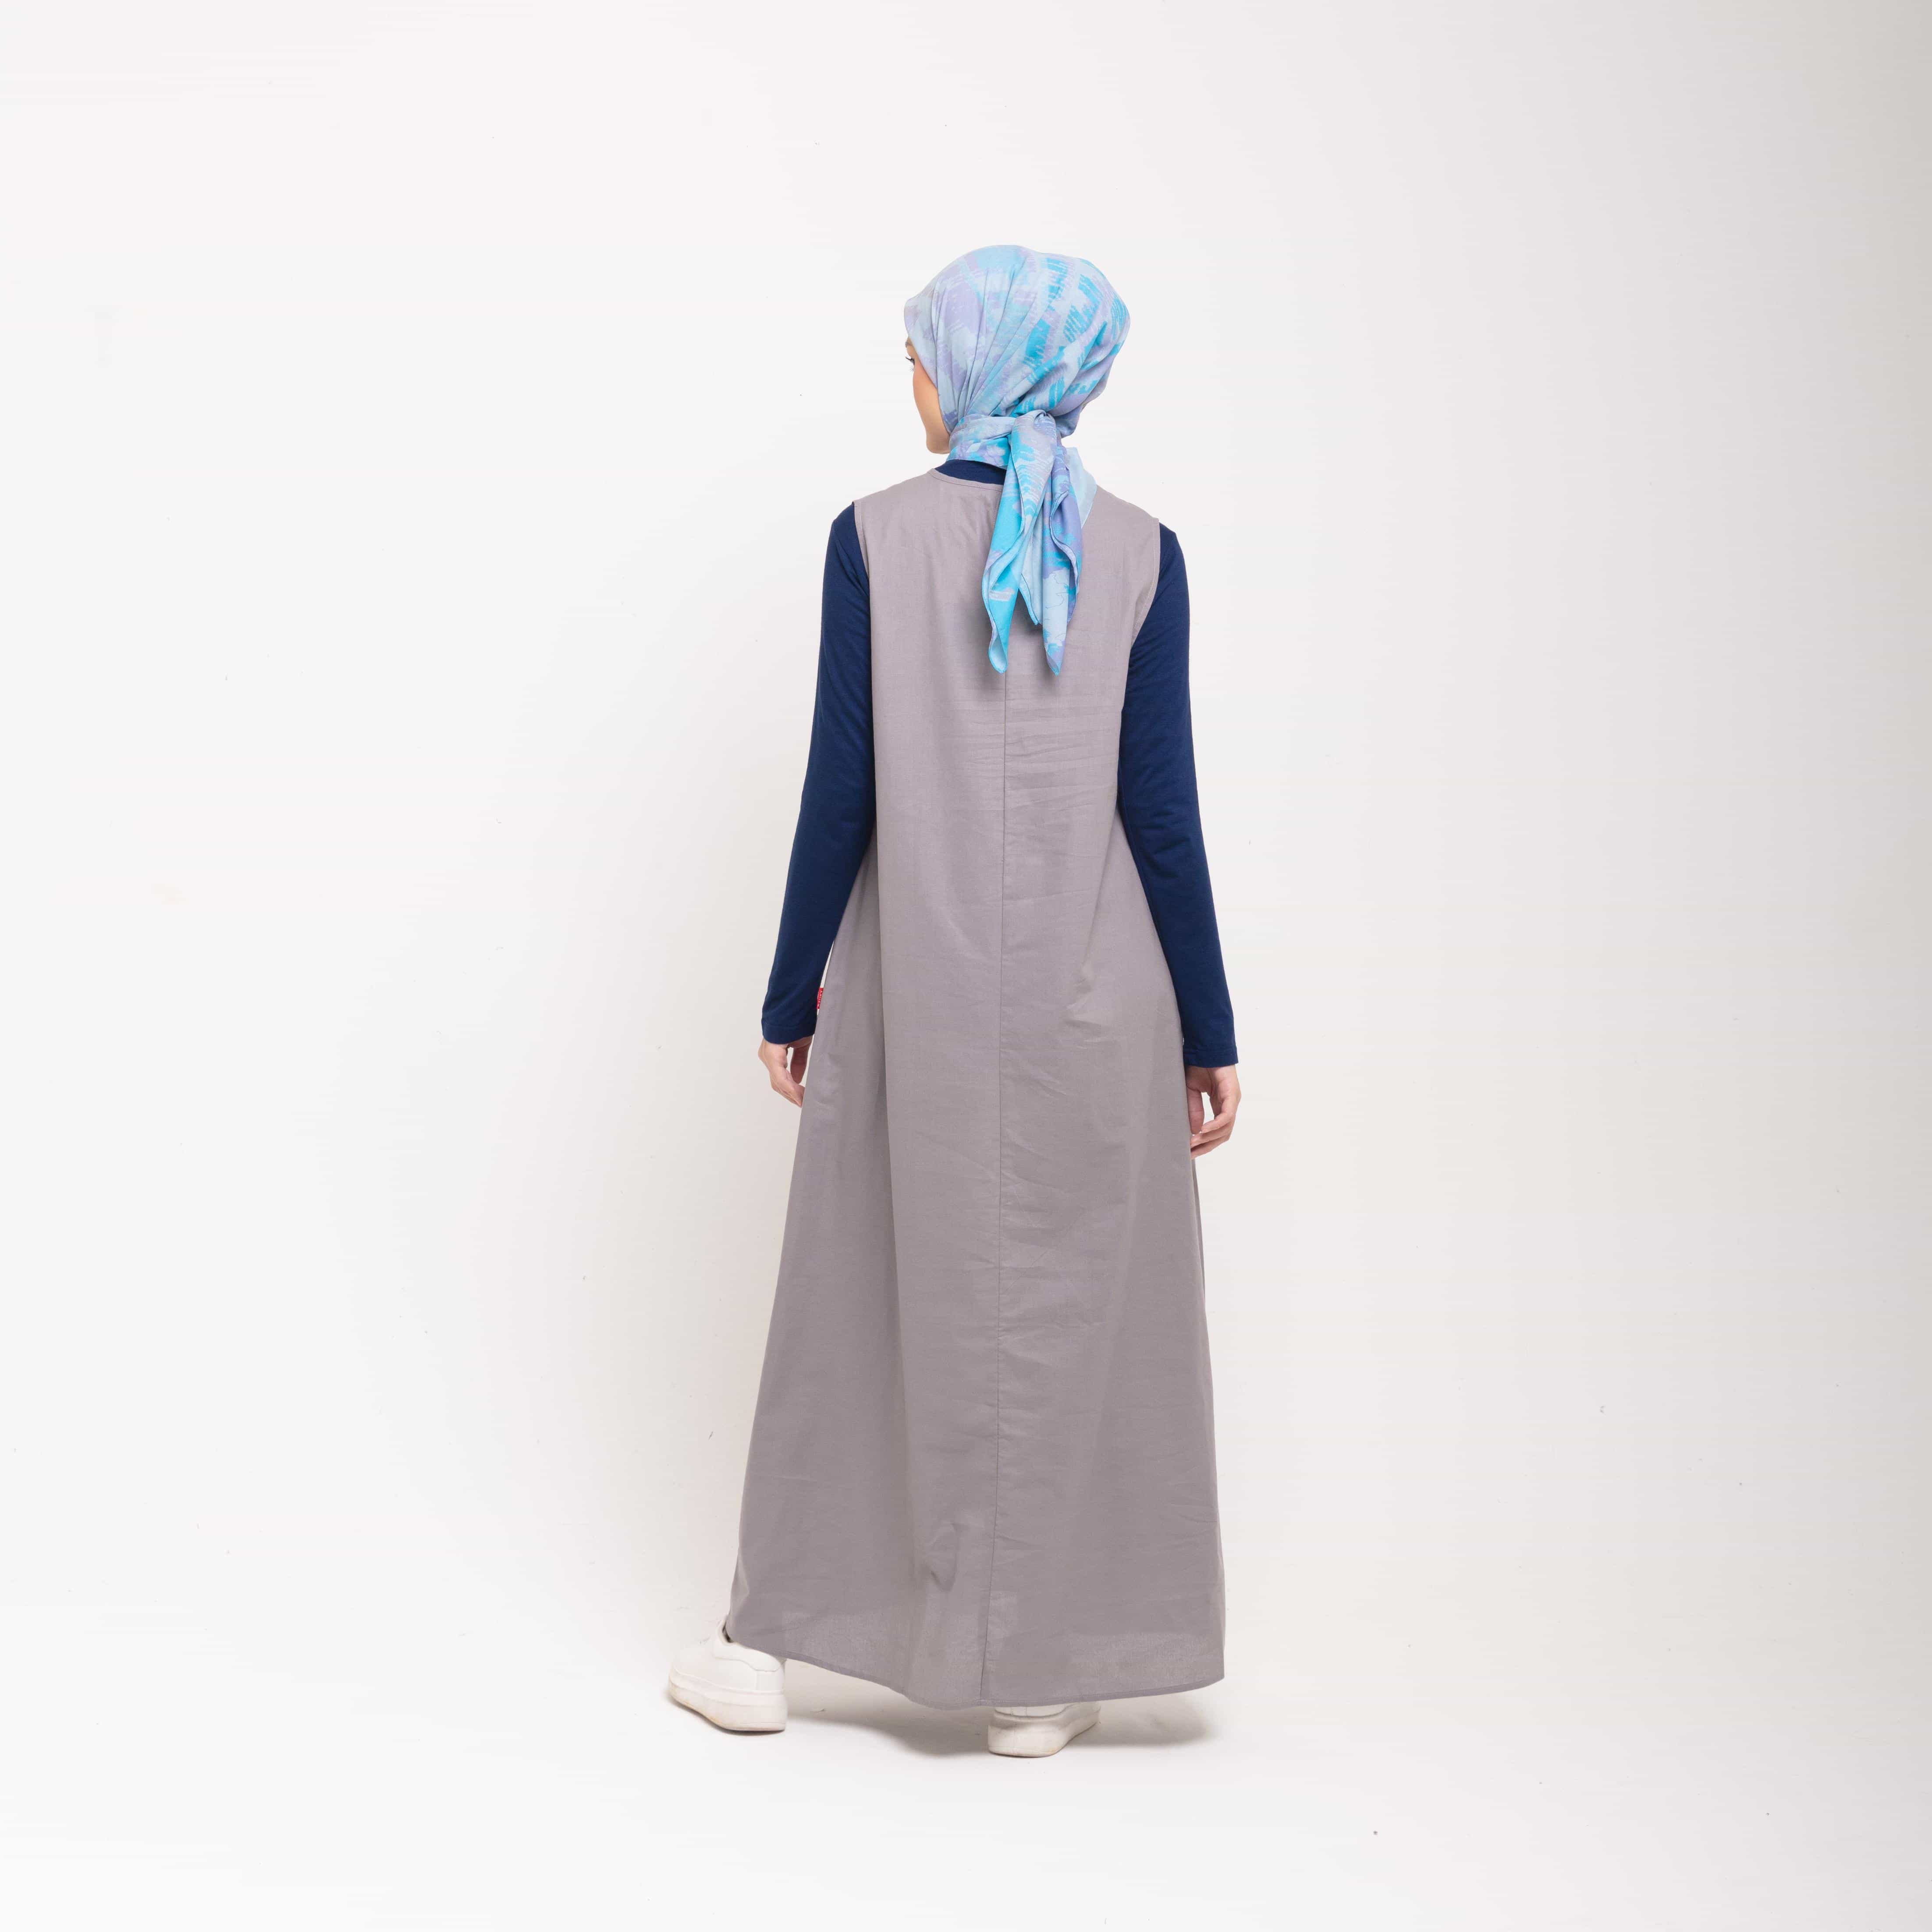 Dress Wanita Muslim Dauky Inner Dress Sleeveless Ruffles - Silver Grey